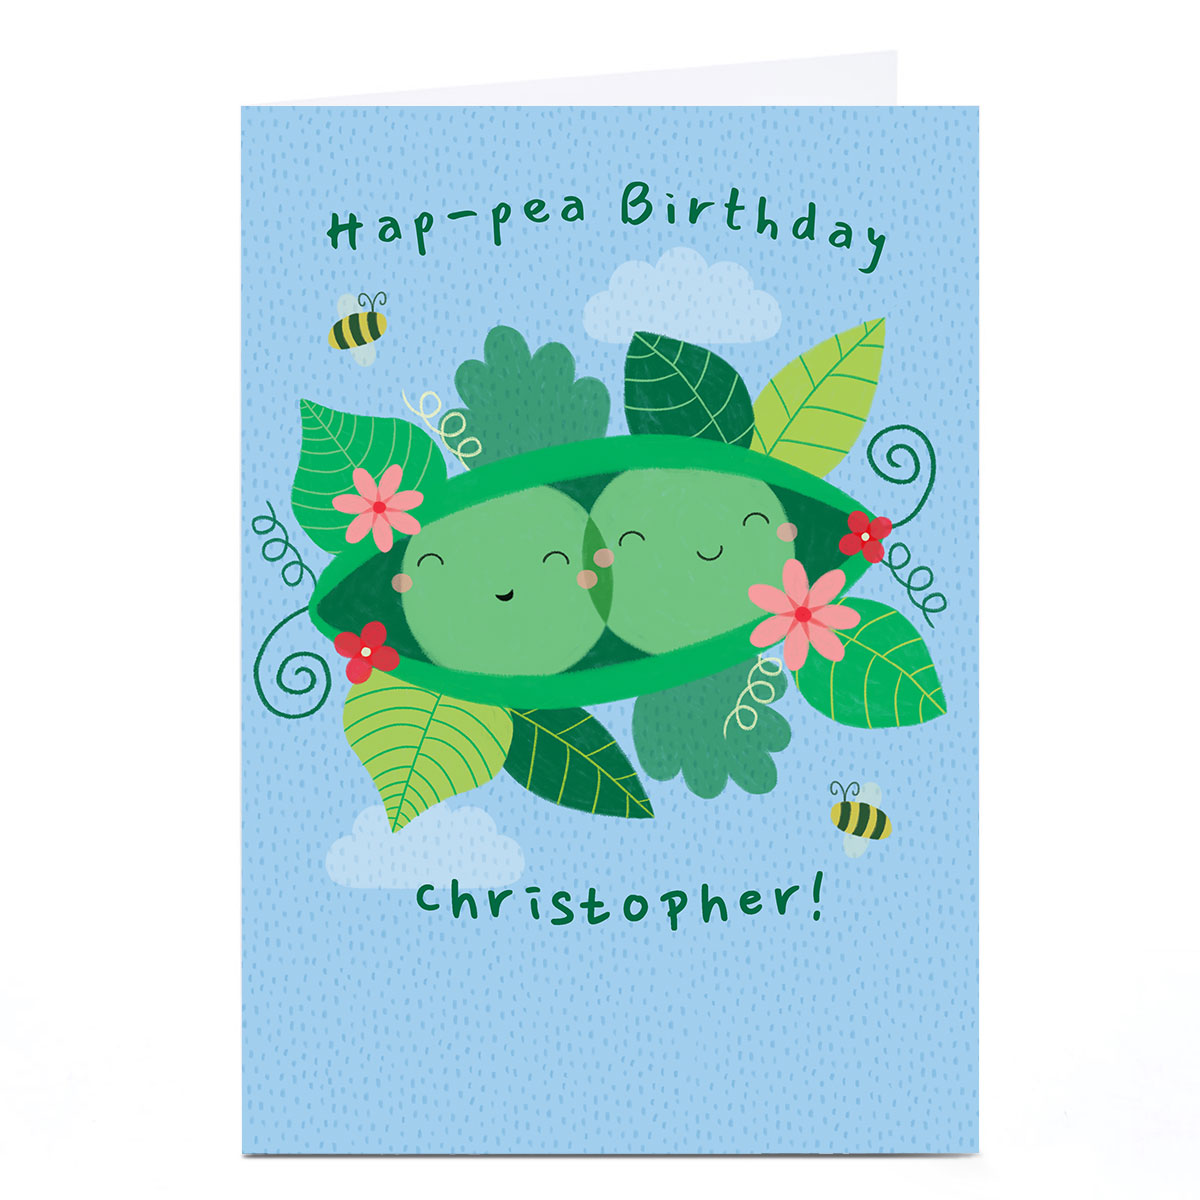 Personalised Hannah Steele Birthday Card - Hap-pea